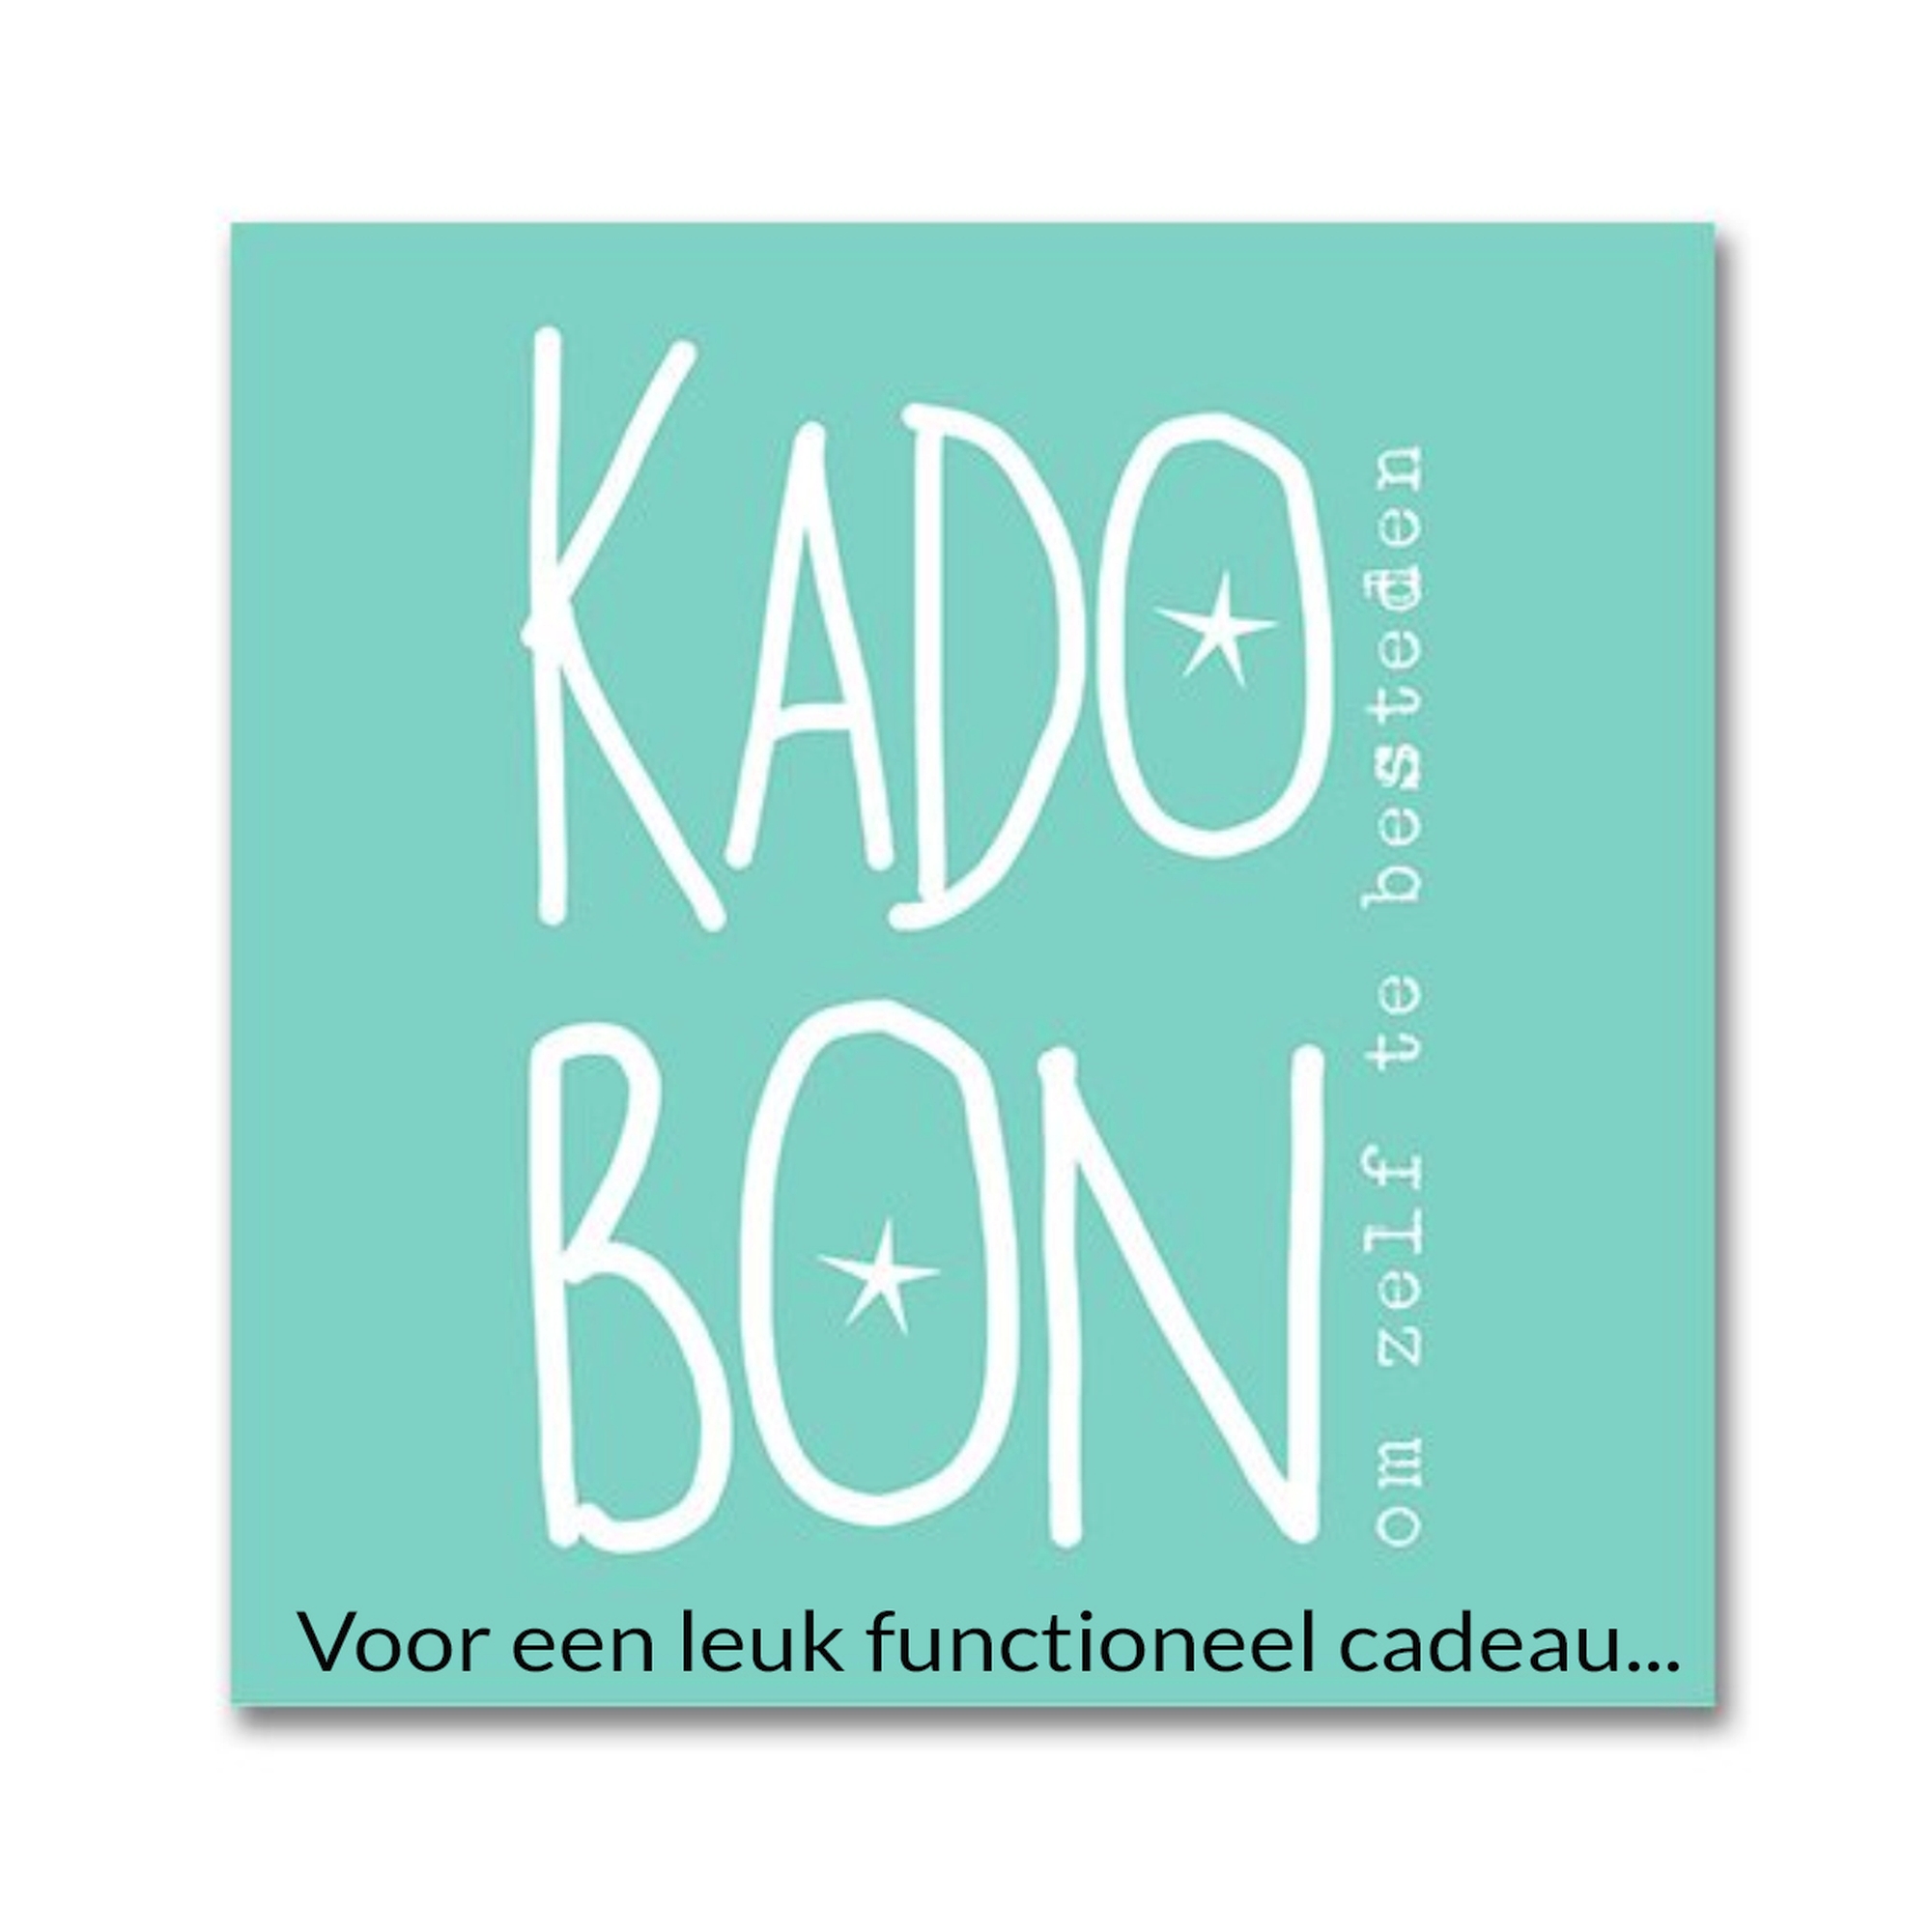 Steenwijk Schoenmode Kadobon Eur 25,00